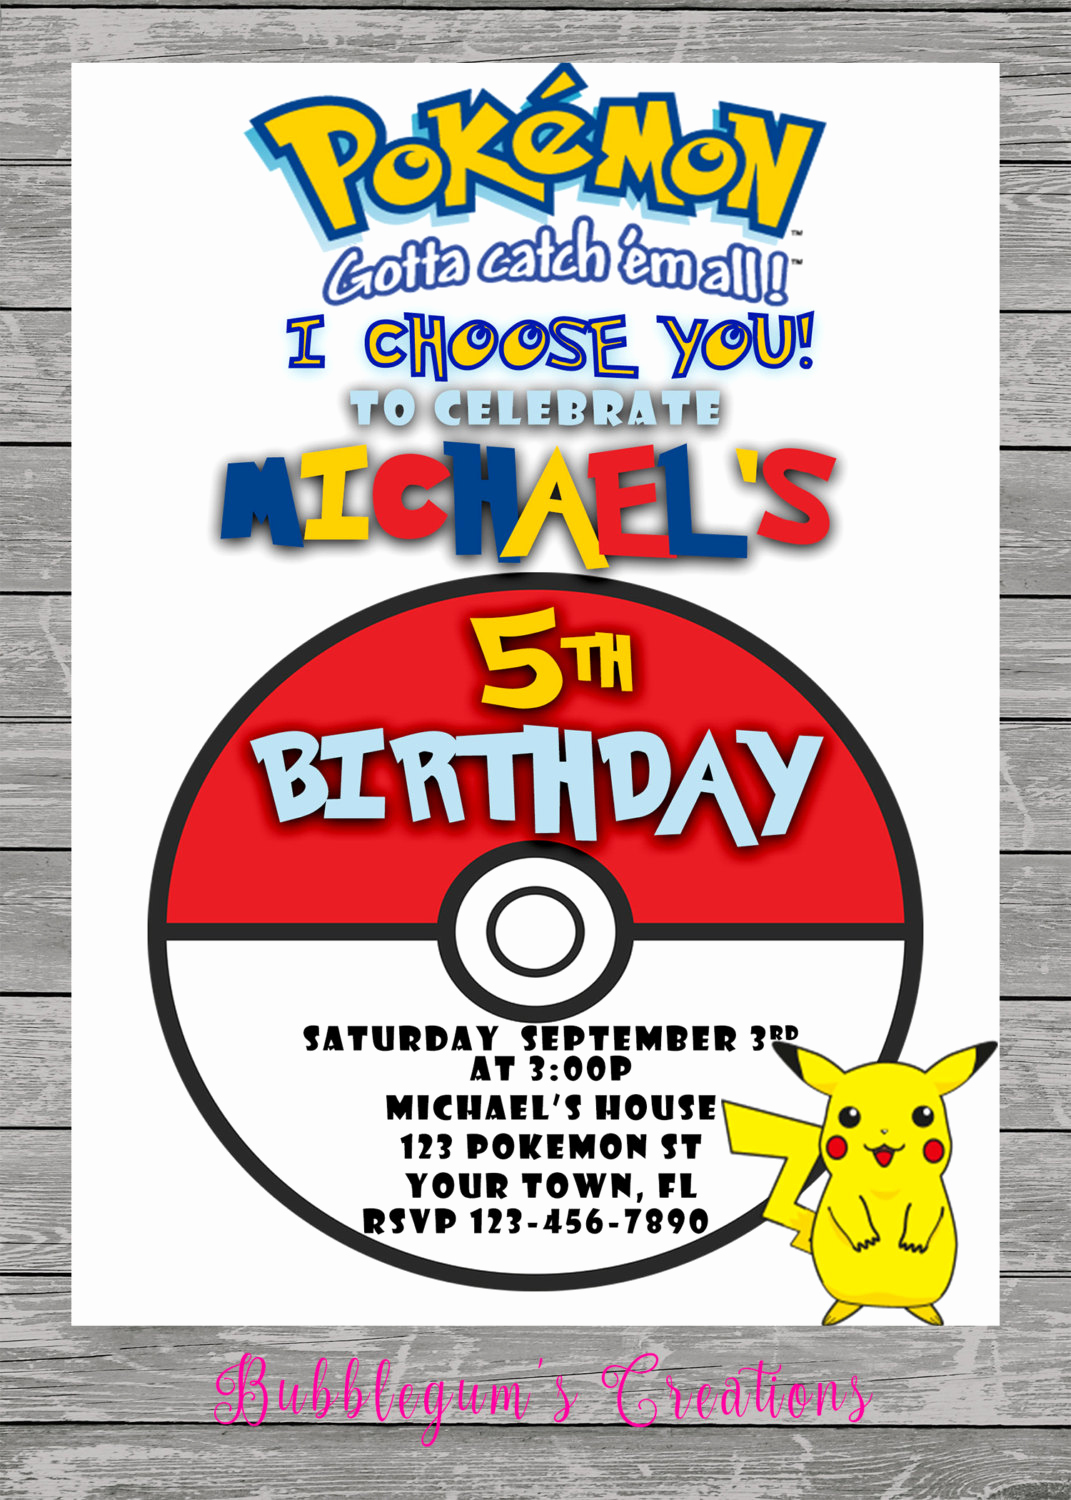 Pokemon Invitation Template Free Inspirational Pokemon Go Birthday Invitation Pokemon Invite